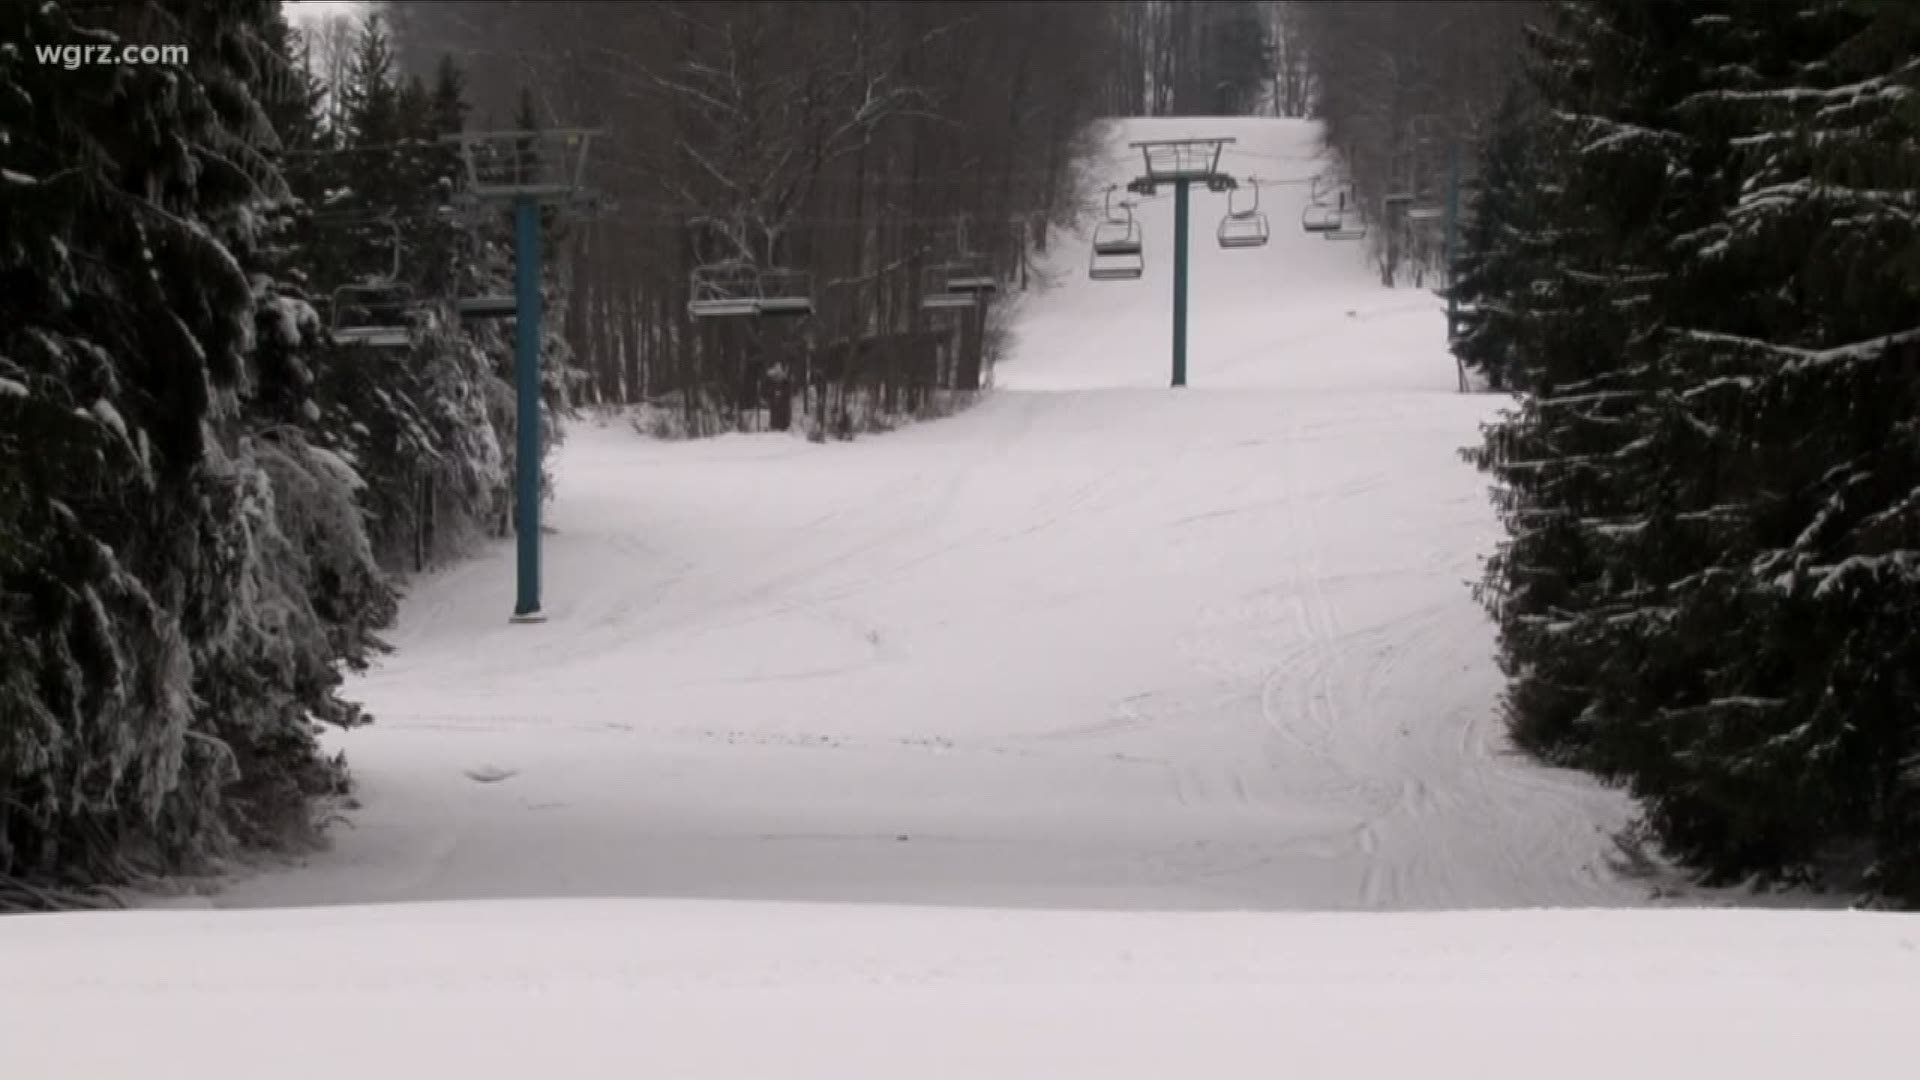 Holimont Ski Resort opening Friday, December 13th